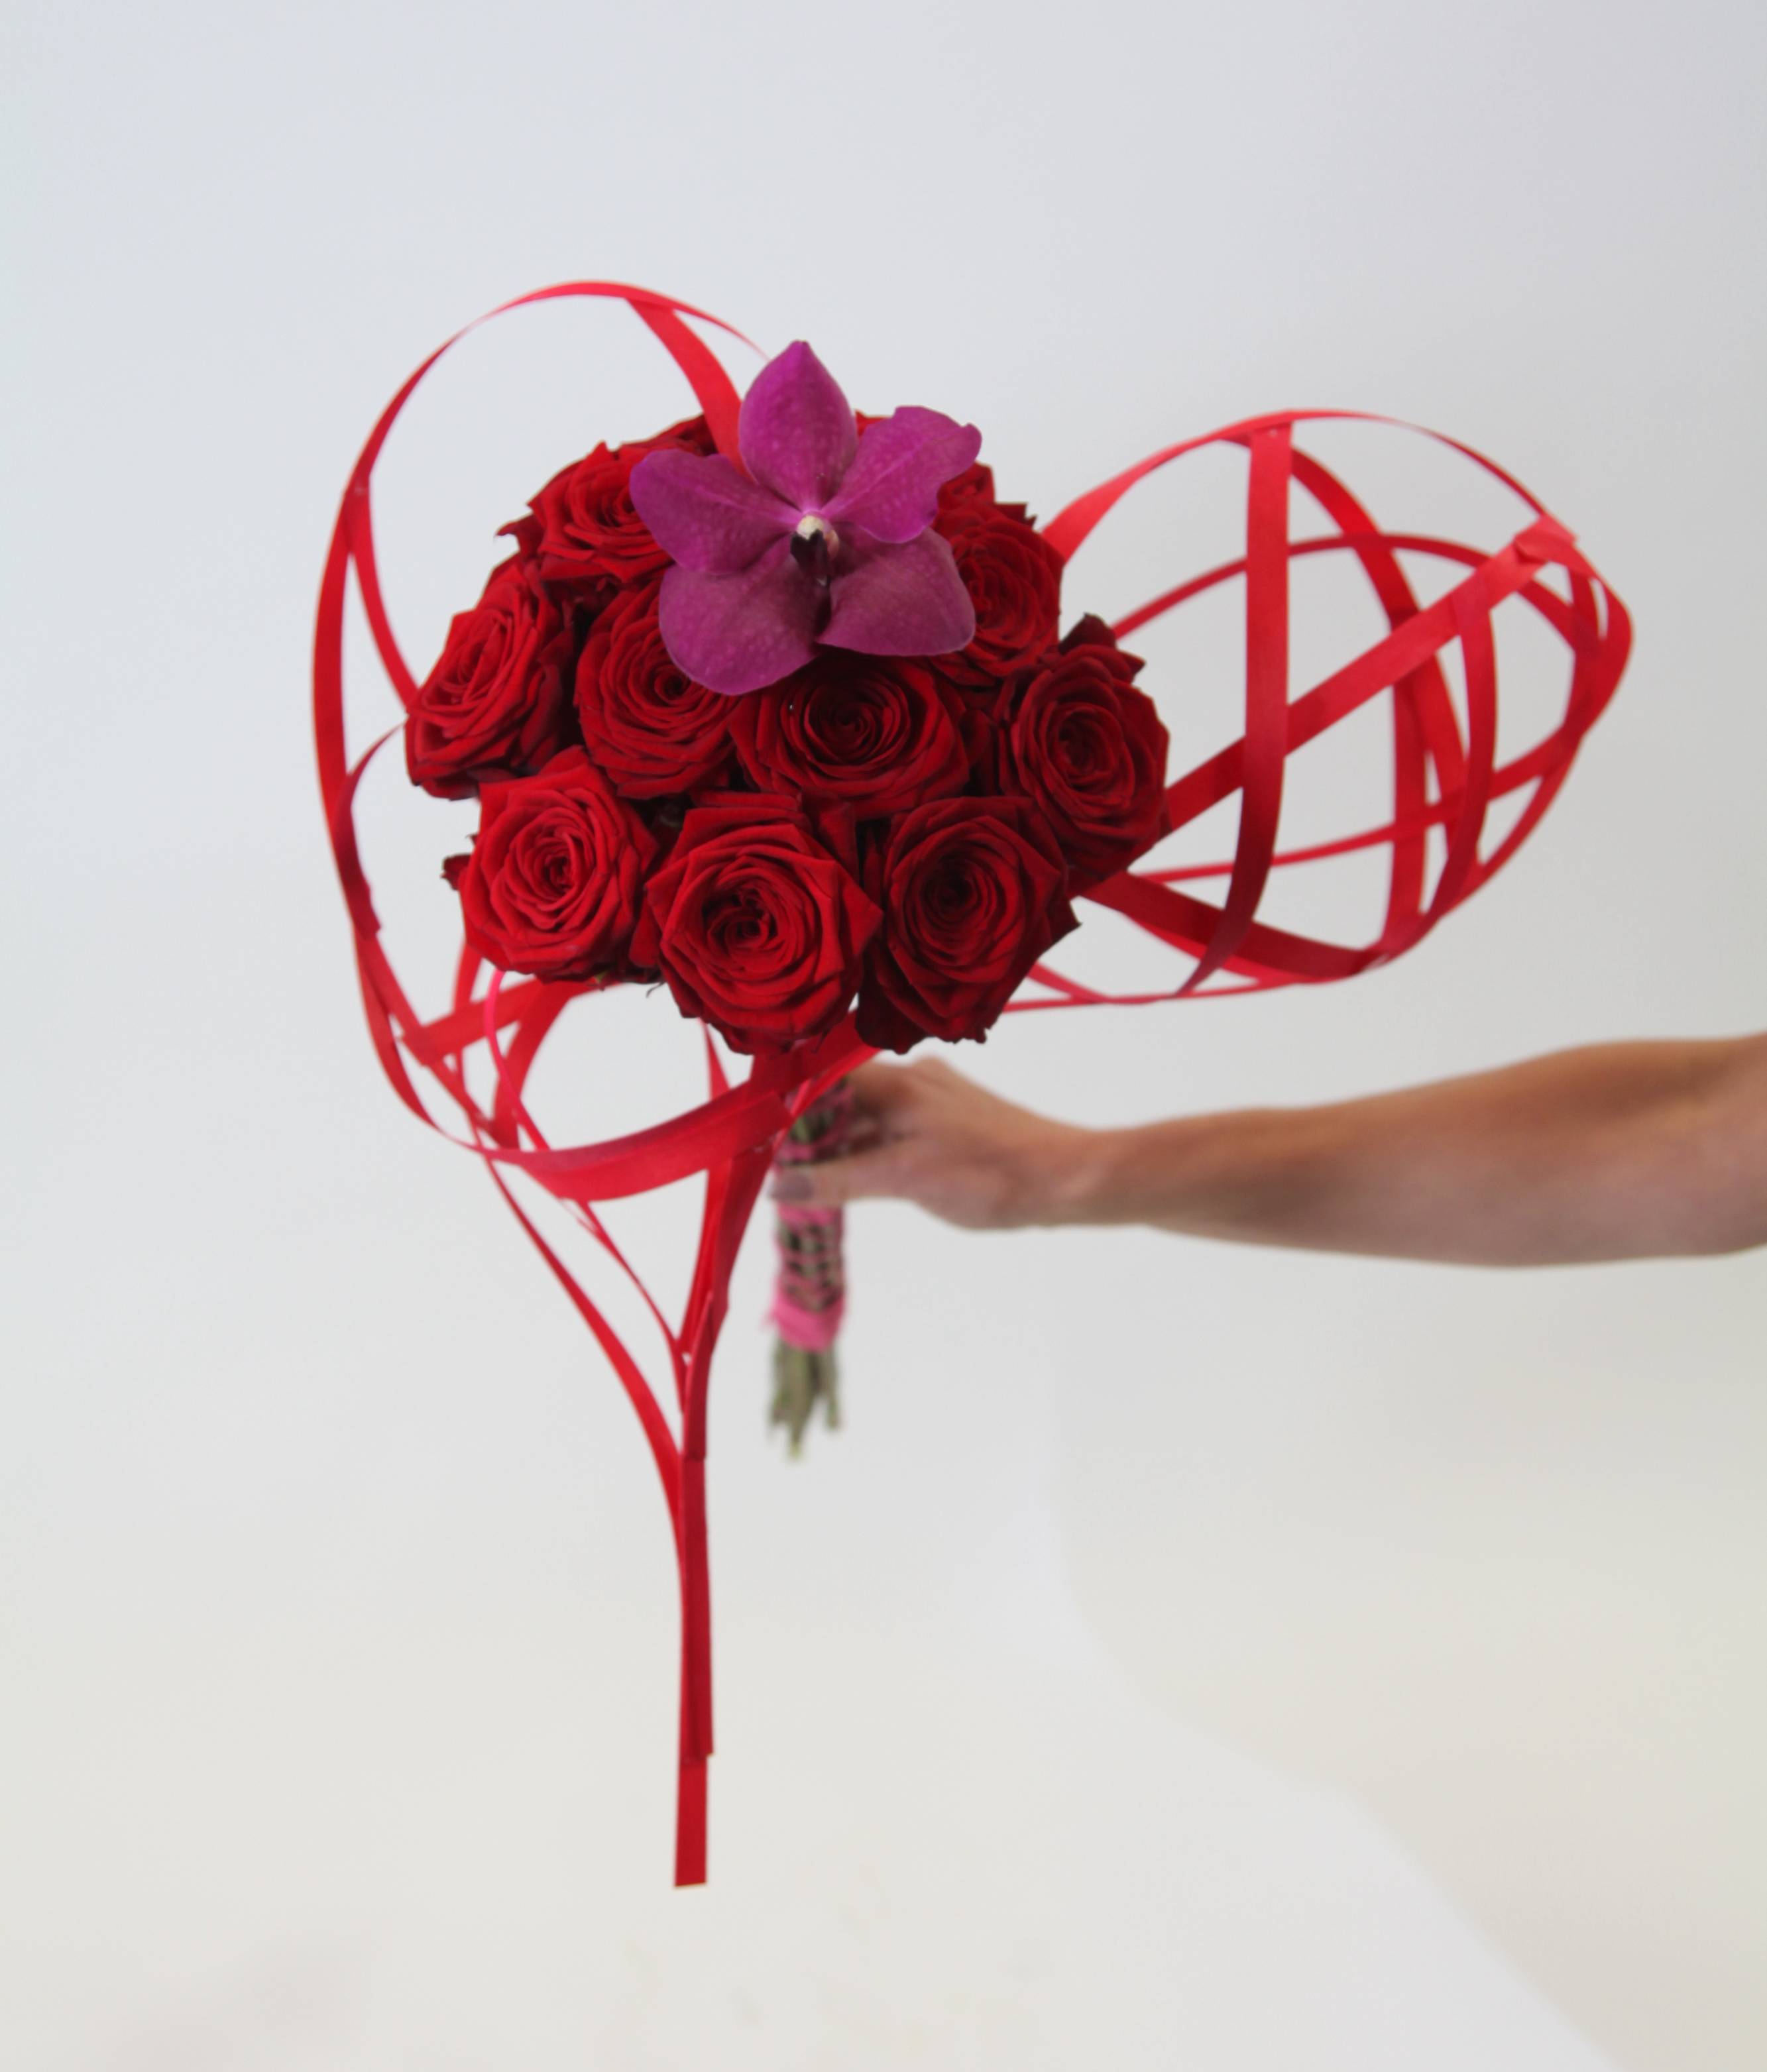 Dan xavier porta nova red naomi valentines day design floral fundamantals